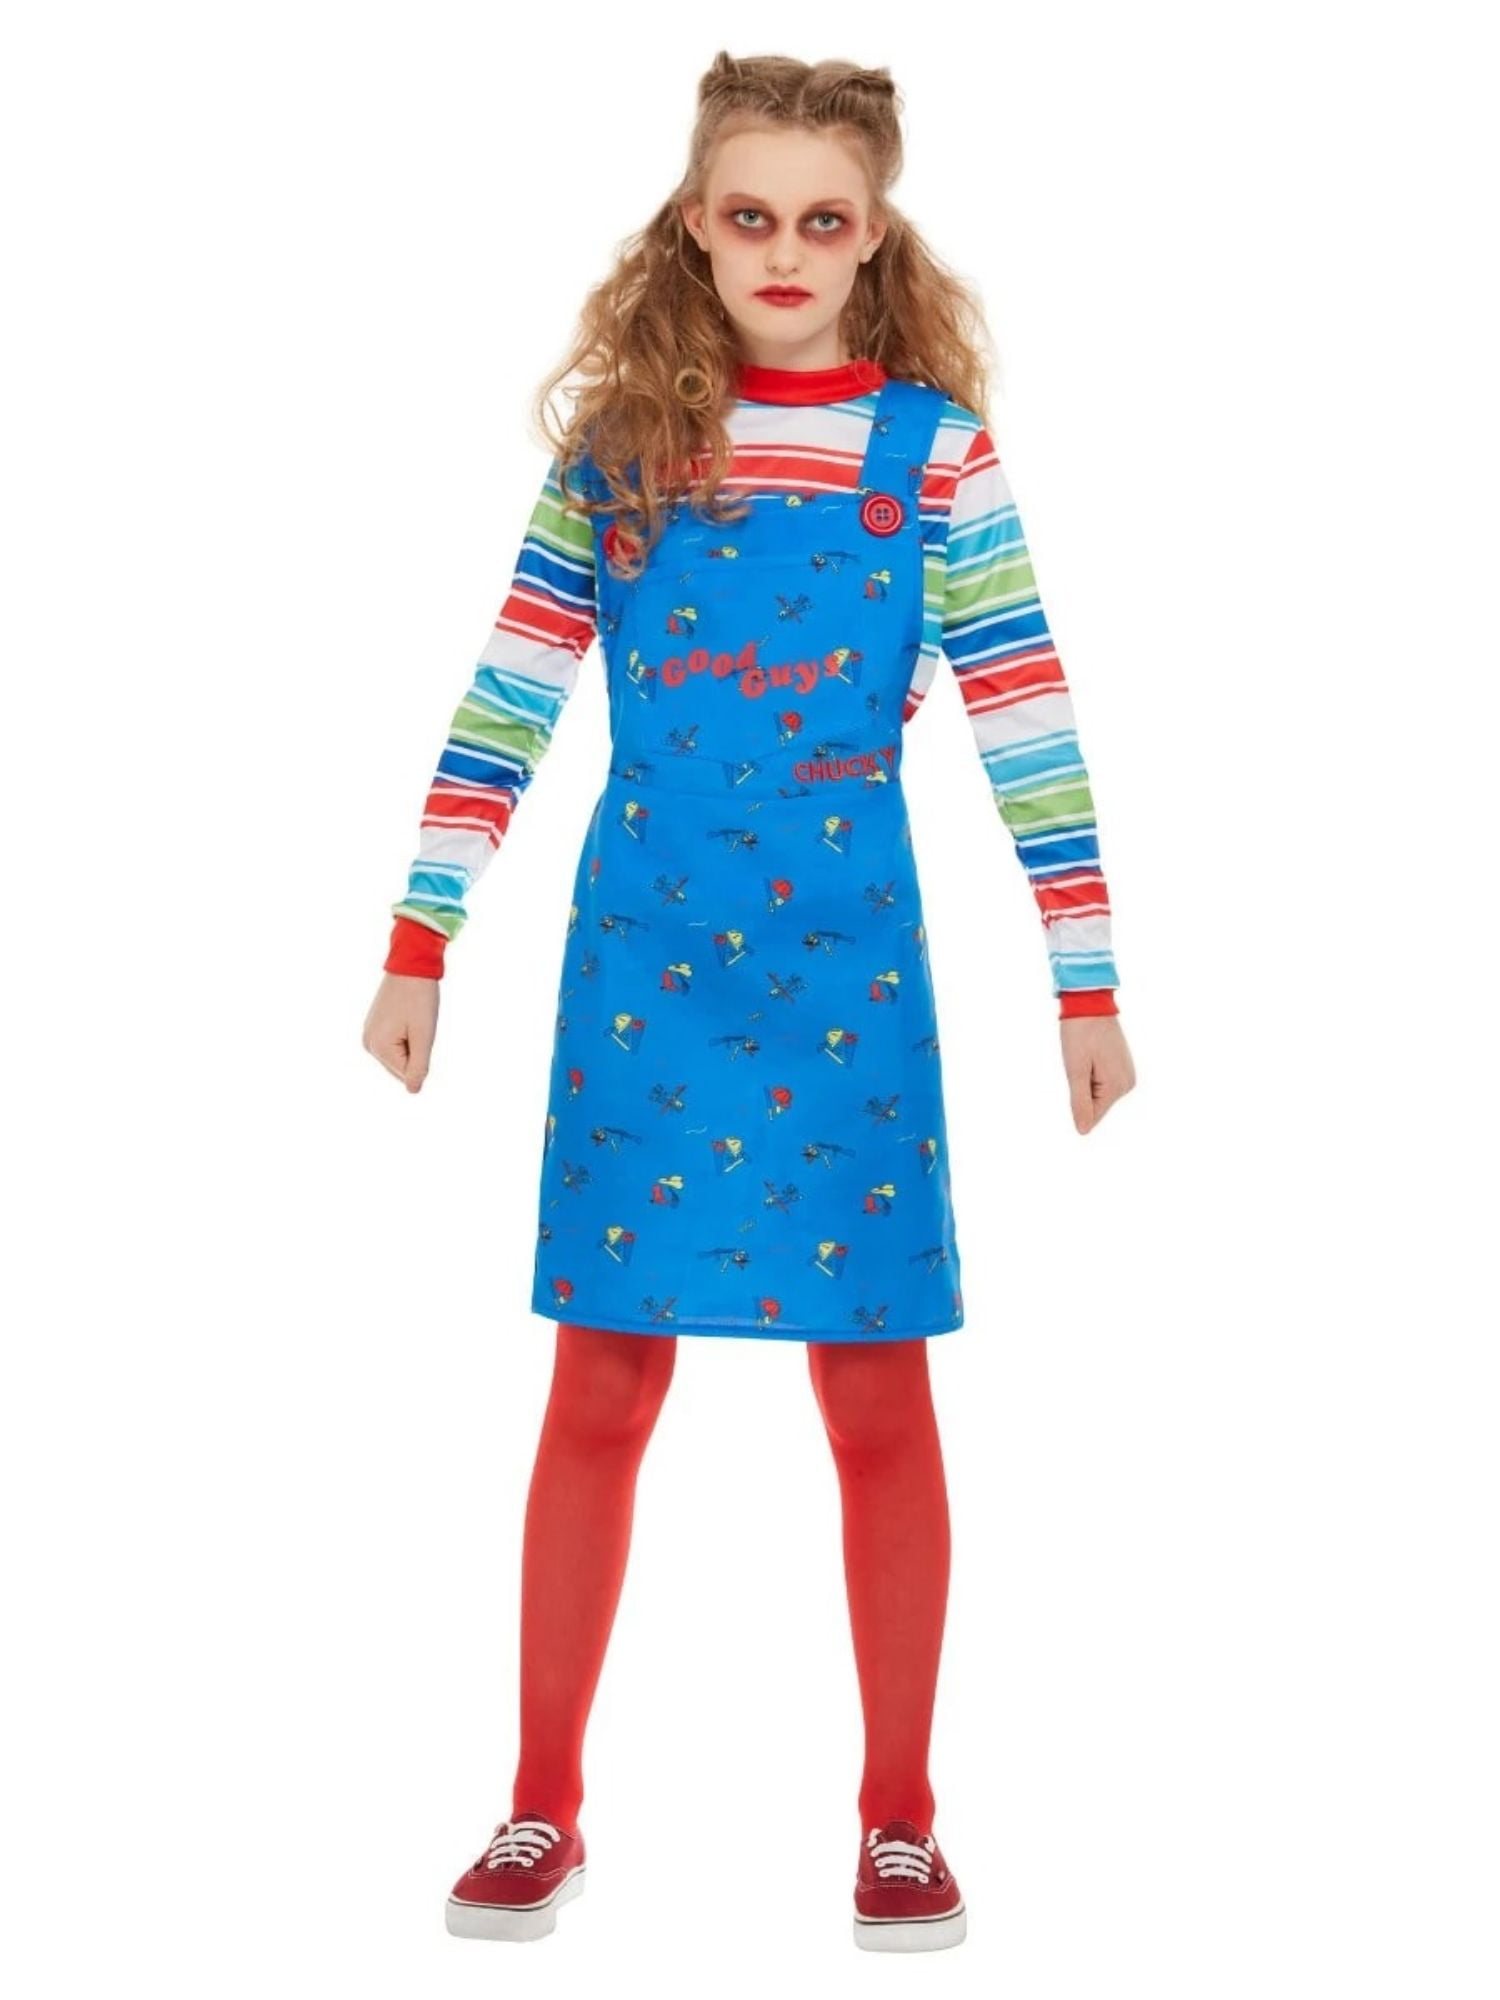 Rodeo Oblea caliente Blue and Red Chucky Girls Small Fancy Dress Halloween Costume - Walmart.com